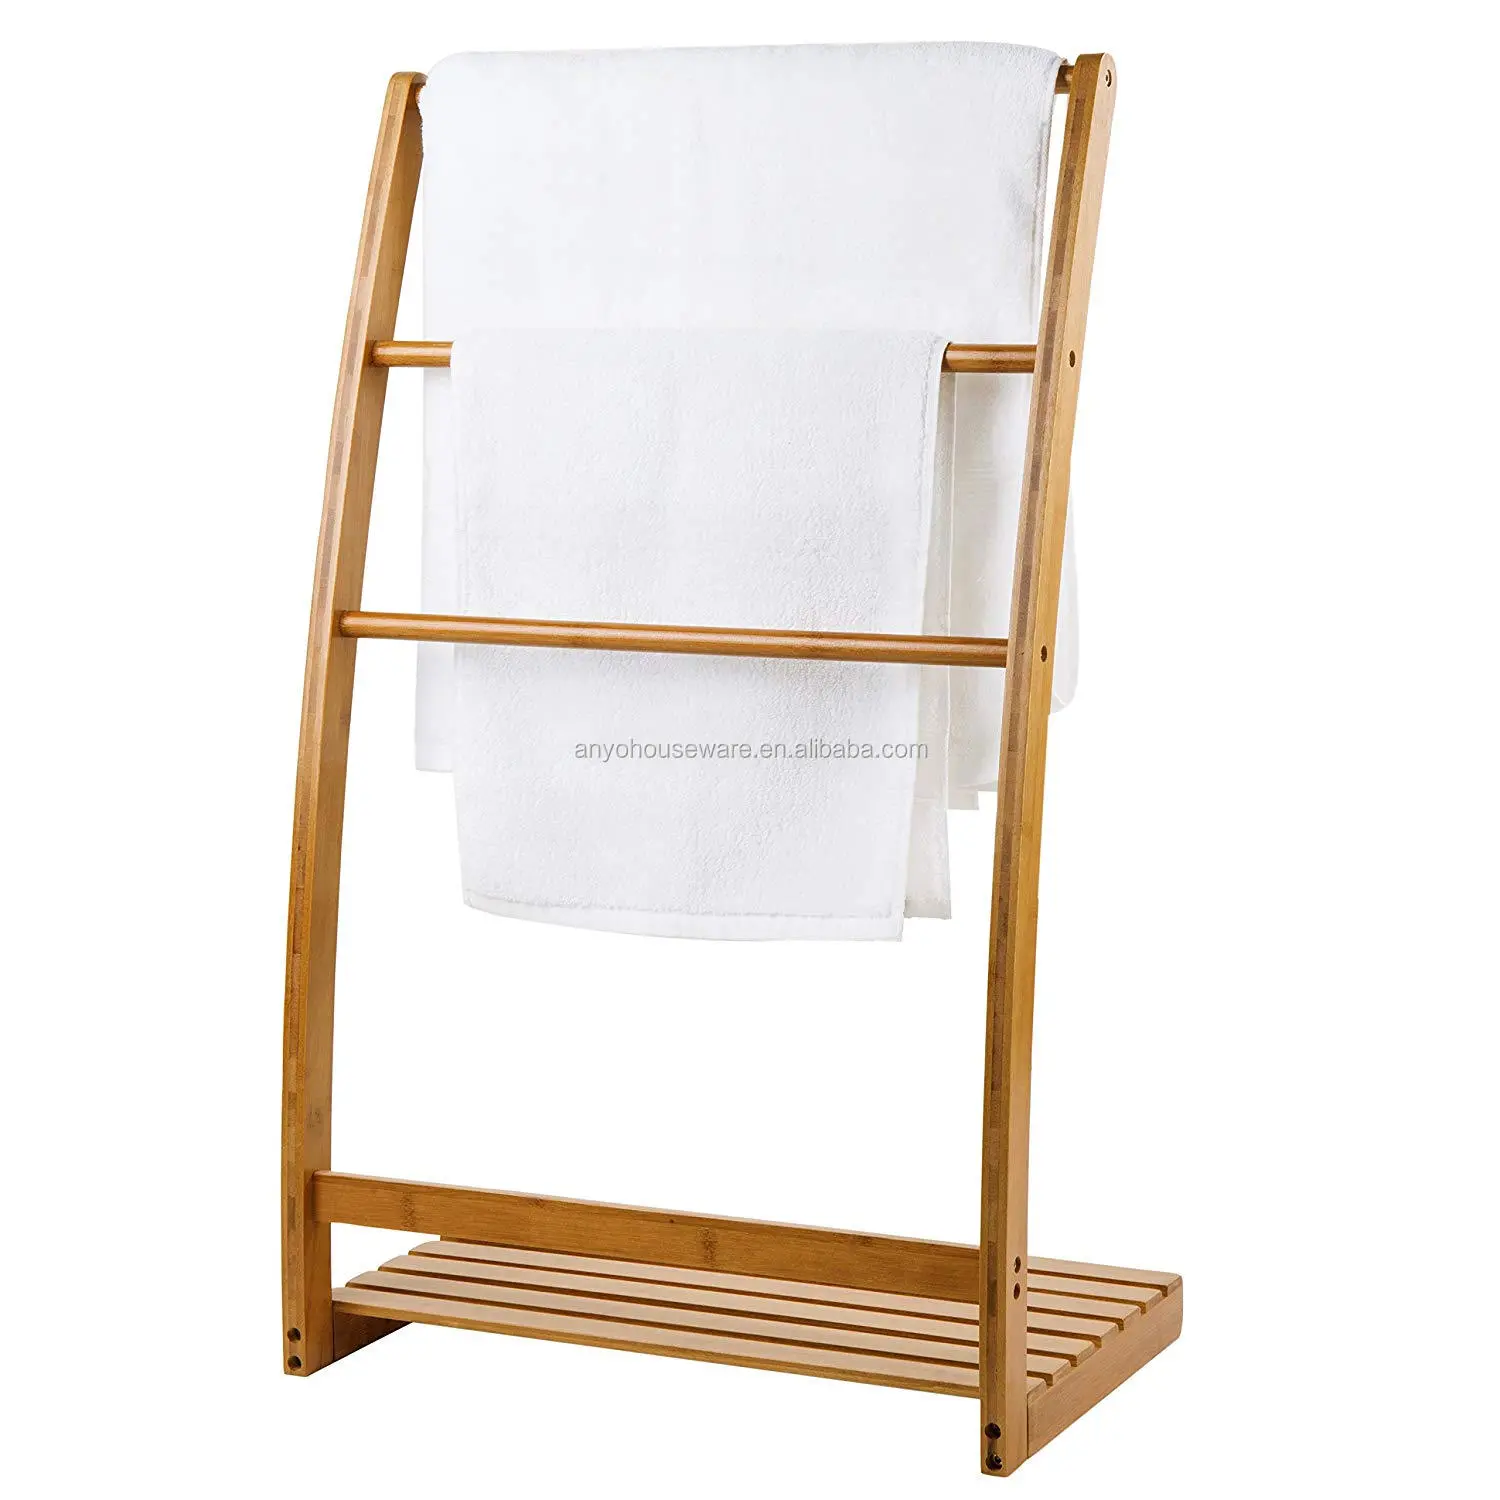 New design Bamboo Free Standing Arc-shaped Rack Towel Rack Bathroom Shelf